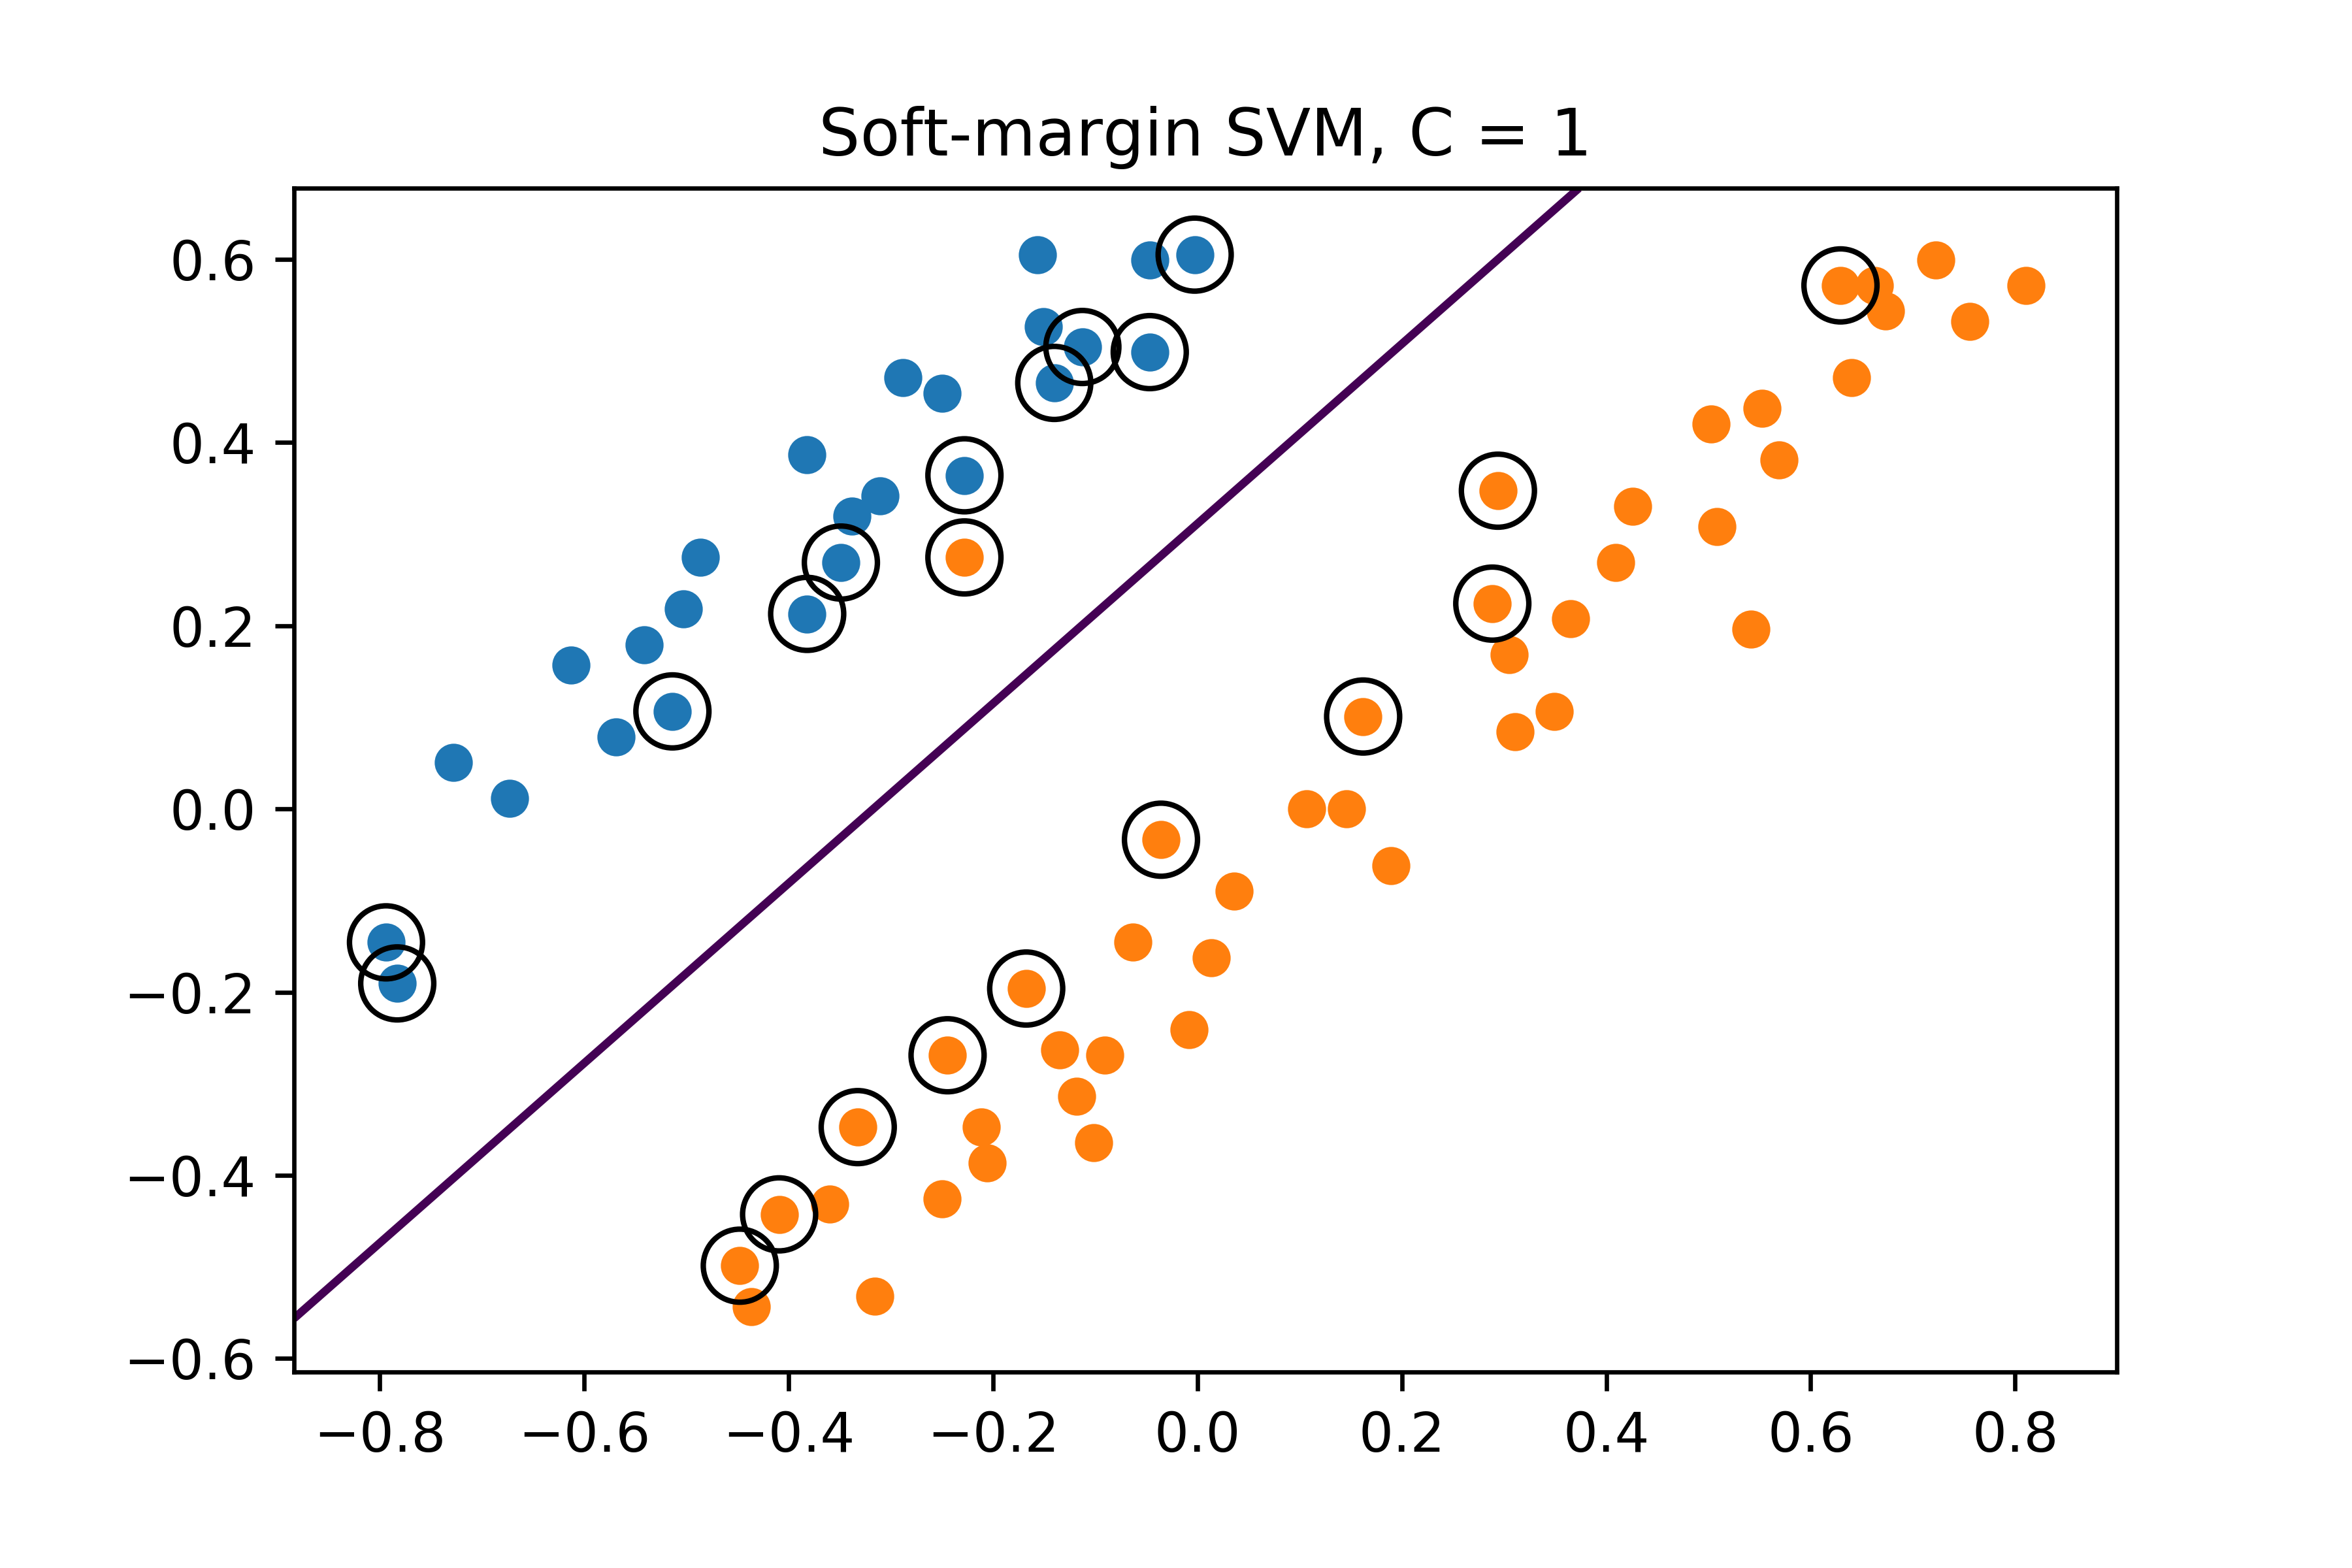 Soft-margin SVM with C = 1